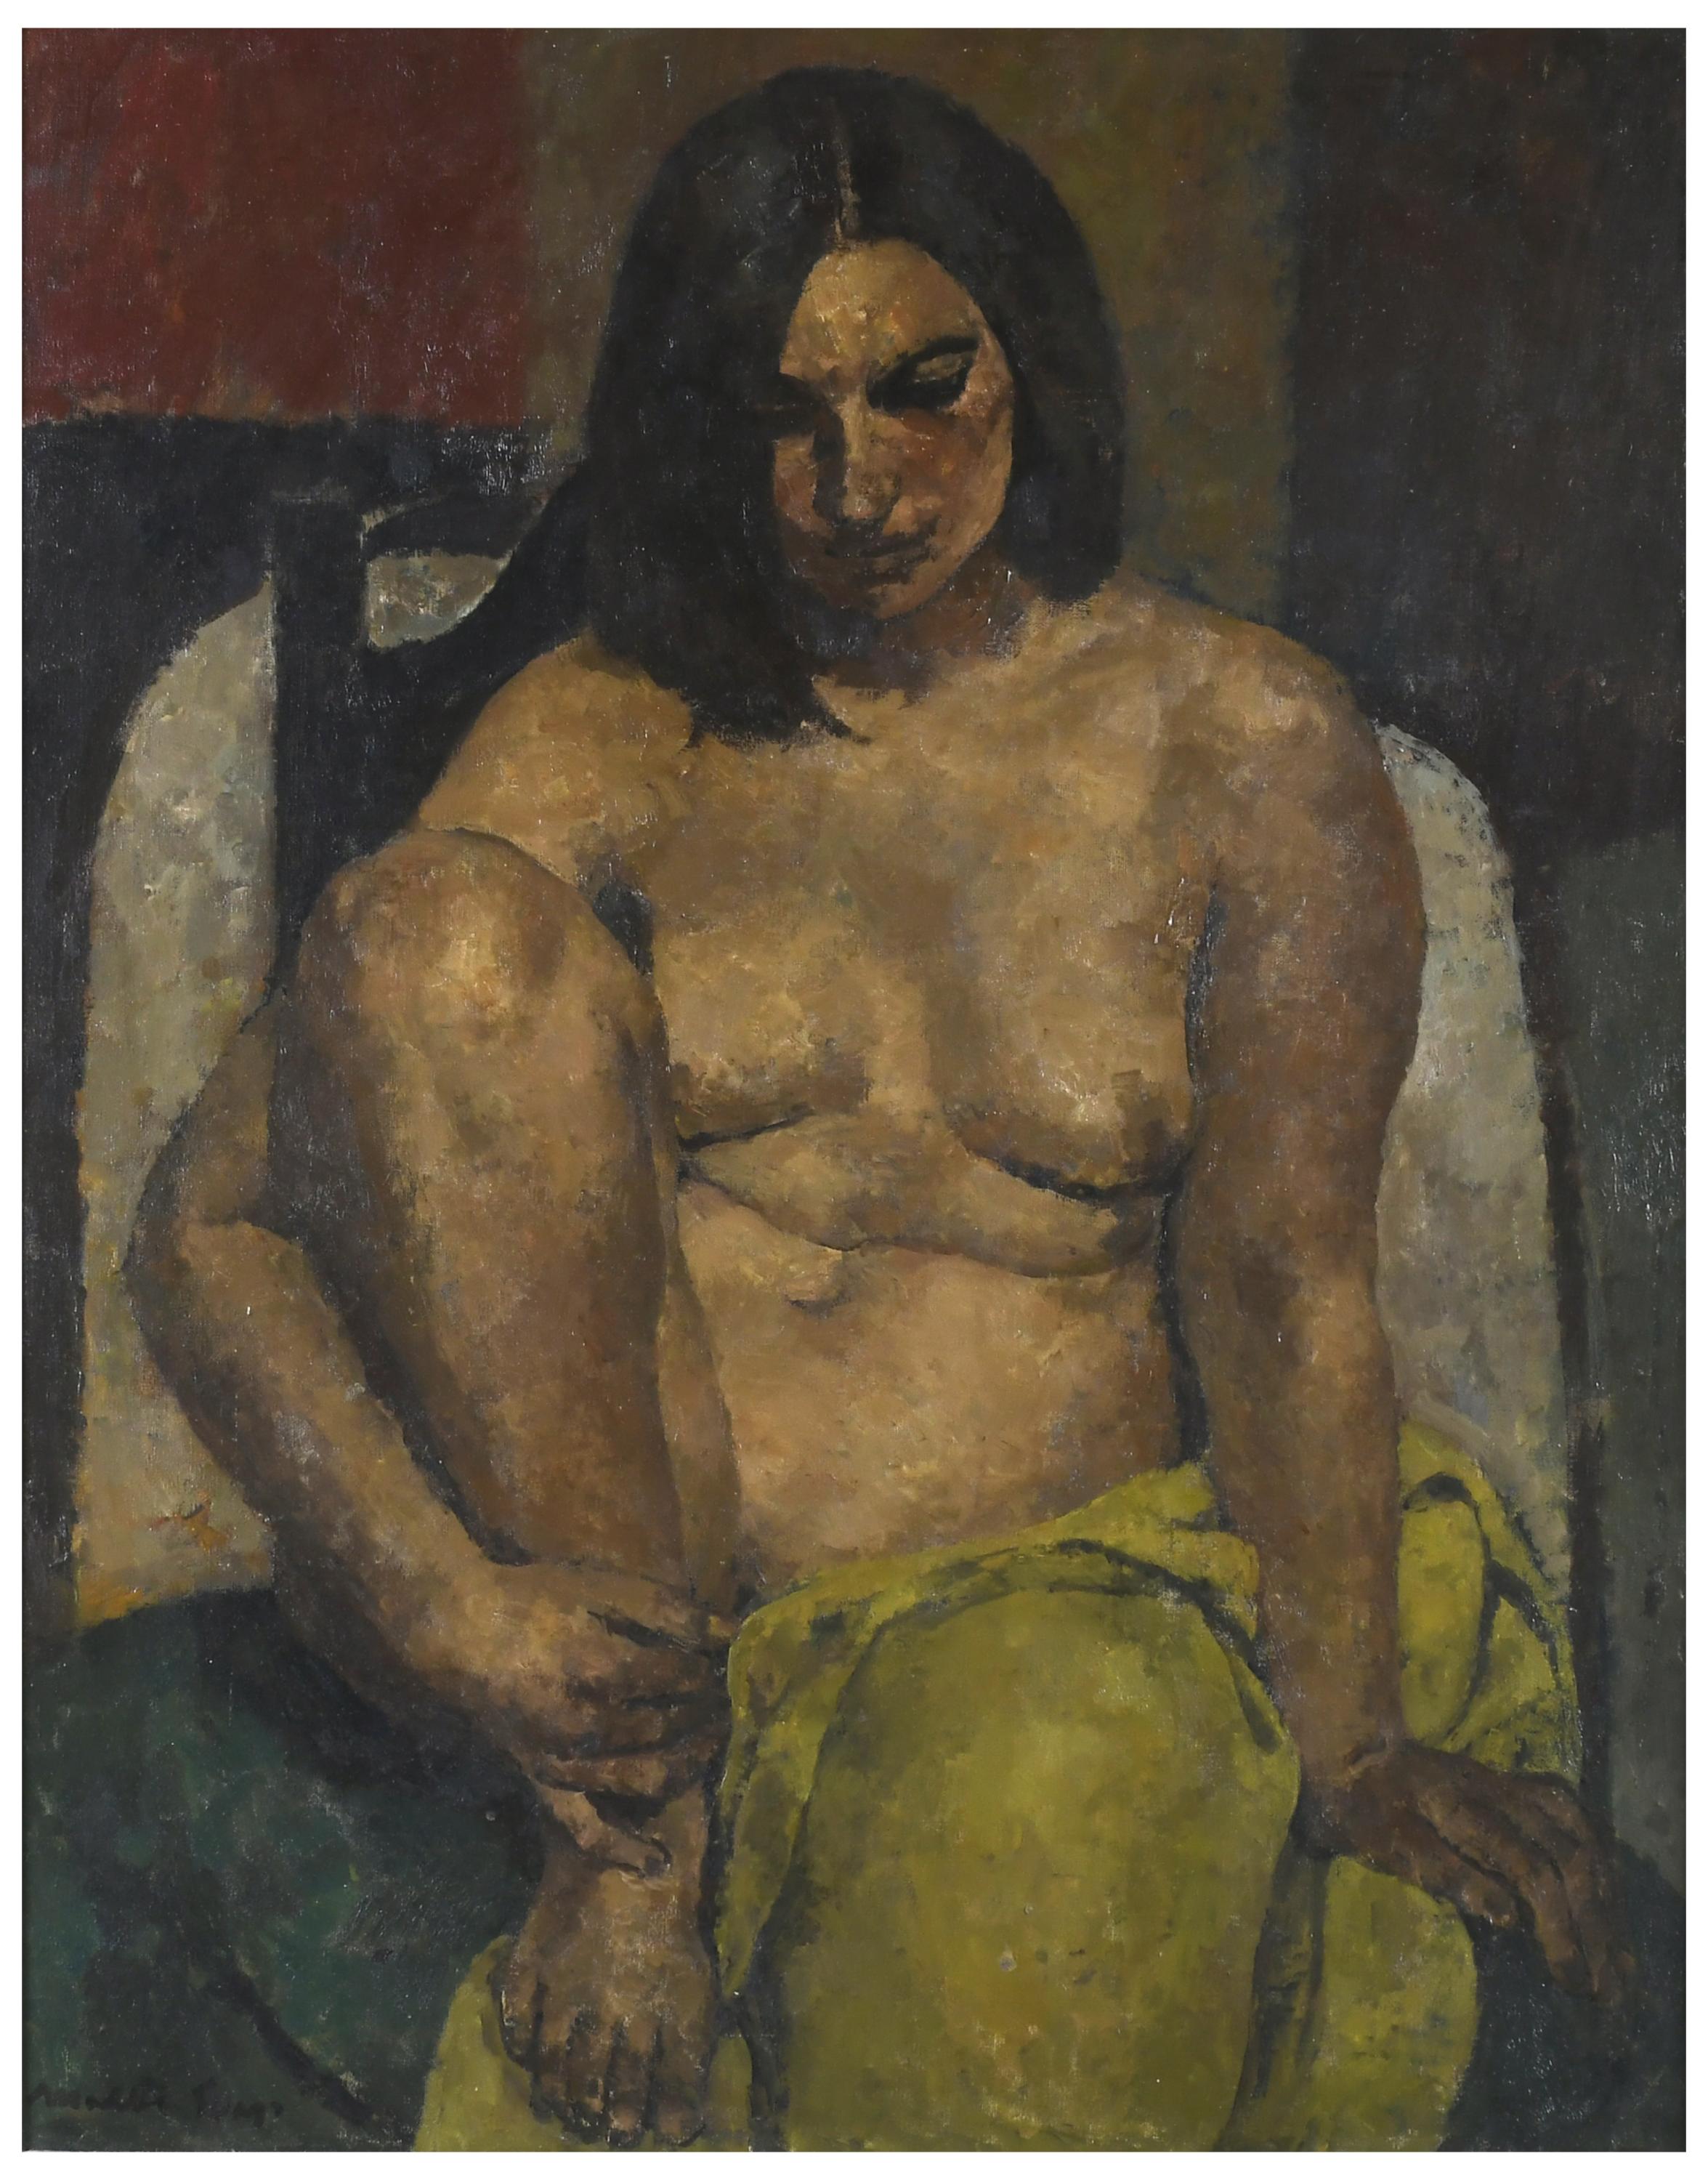 JOSEP MARIA MALLOL SUAZO (1910-1986). "THE MODEL". 